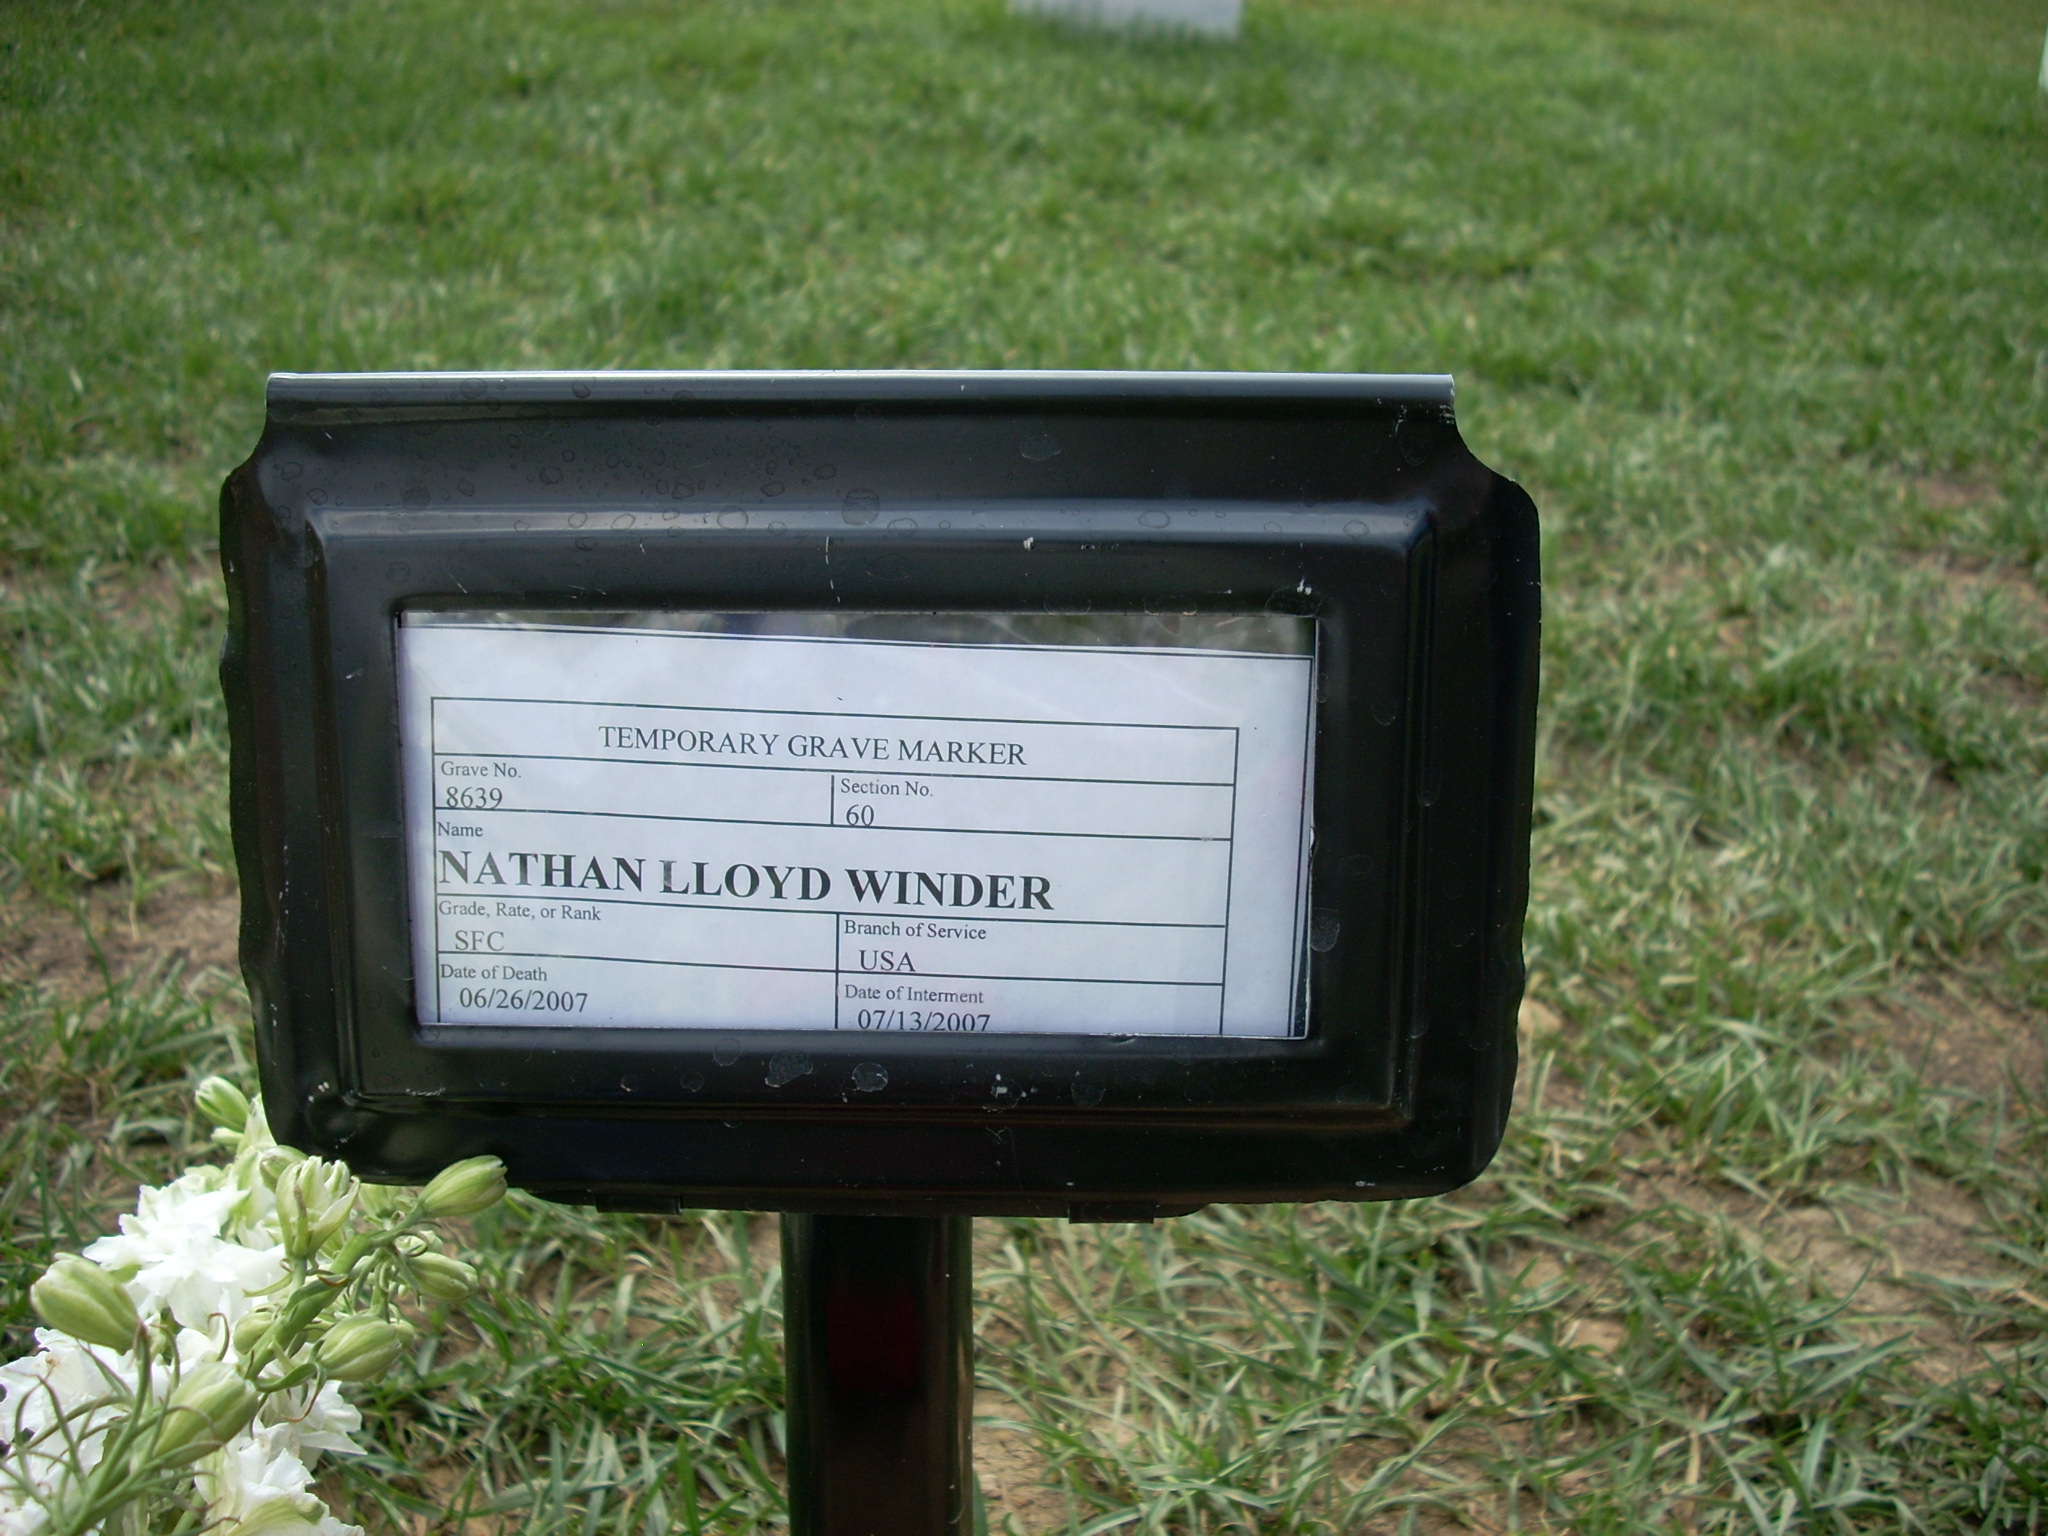 nlwinder-gravesite-photo-july-2007-001